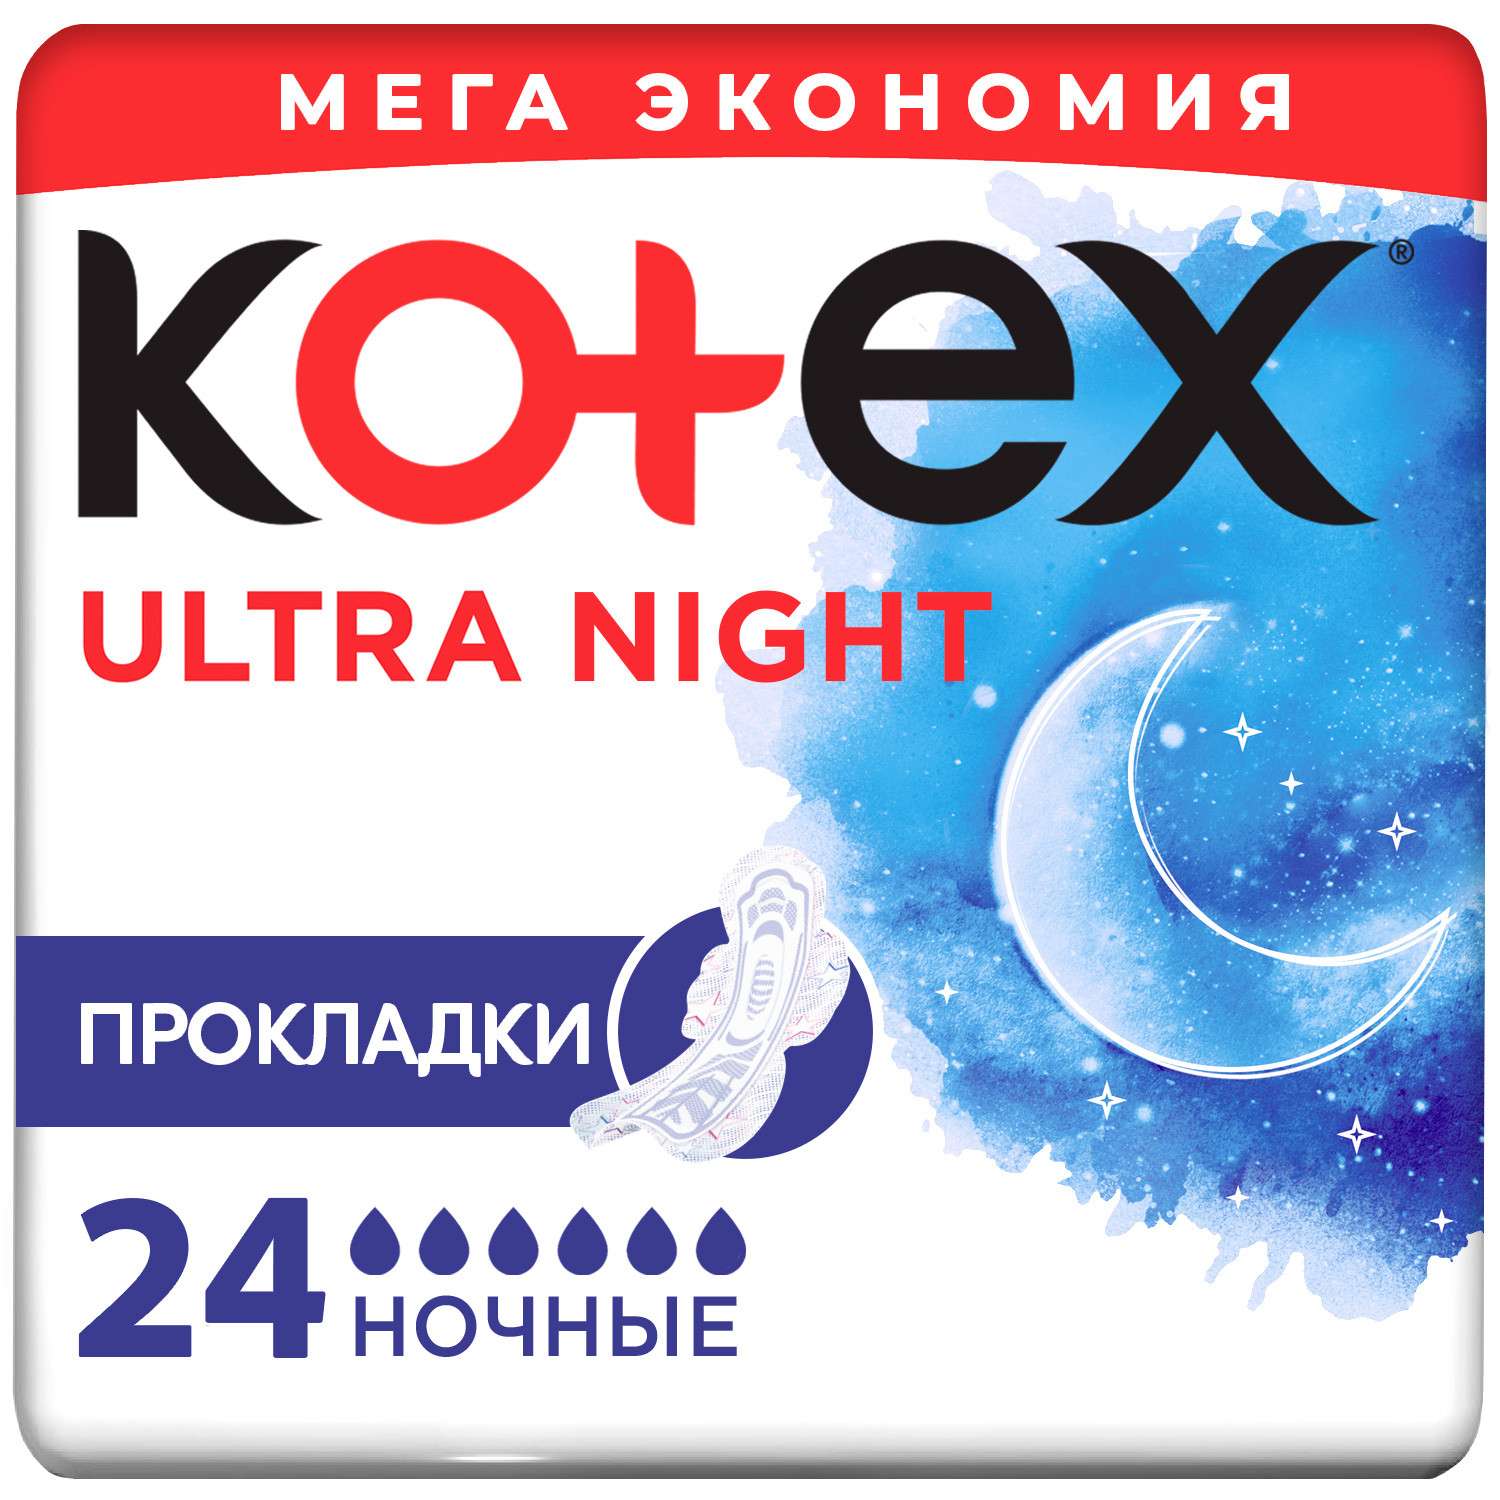 Прокладки Kotex Ultra Ночные 24шт - фото 1